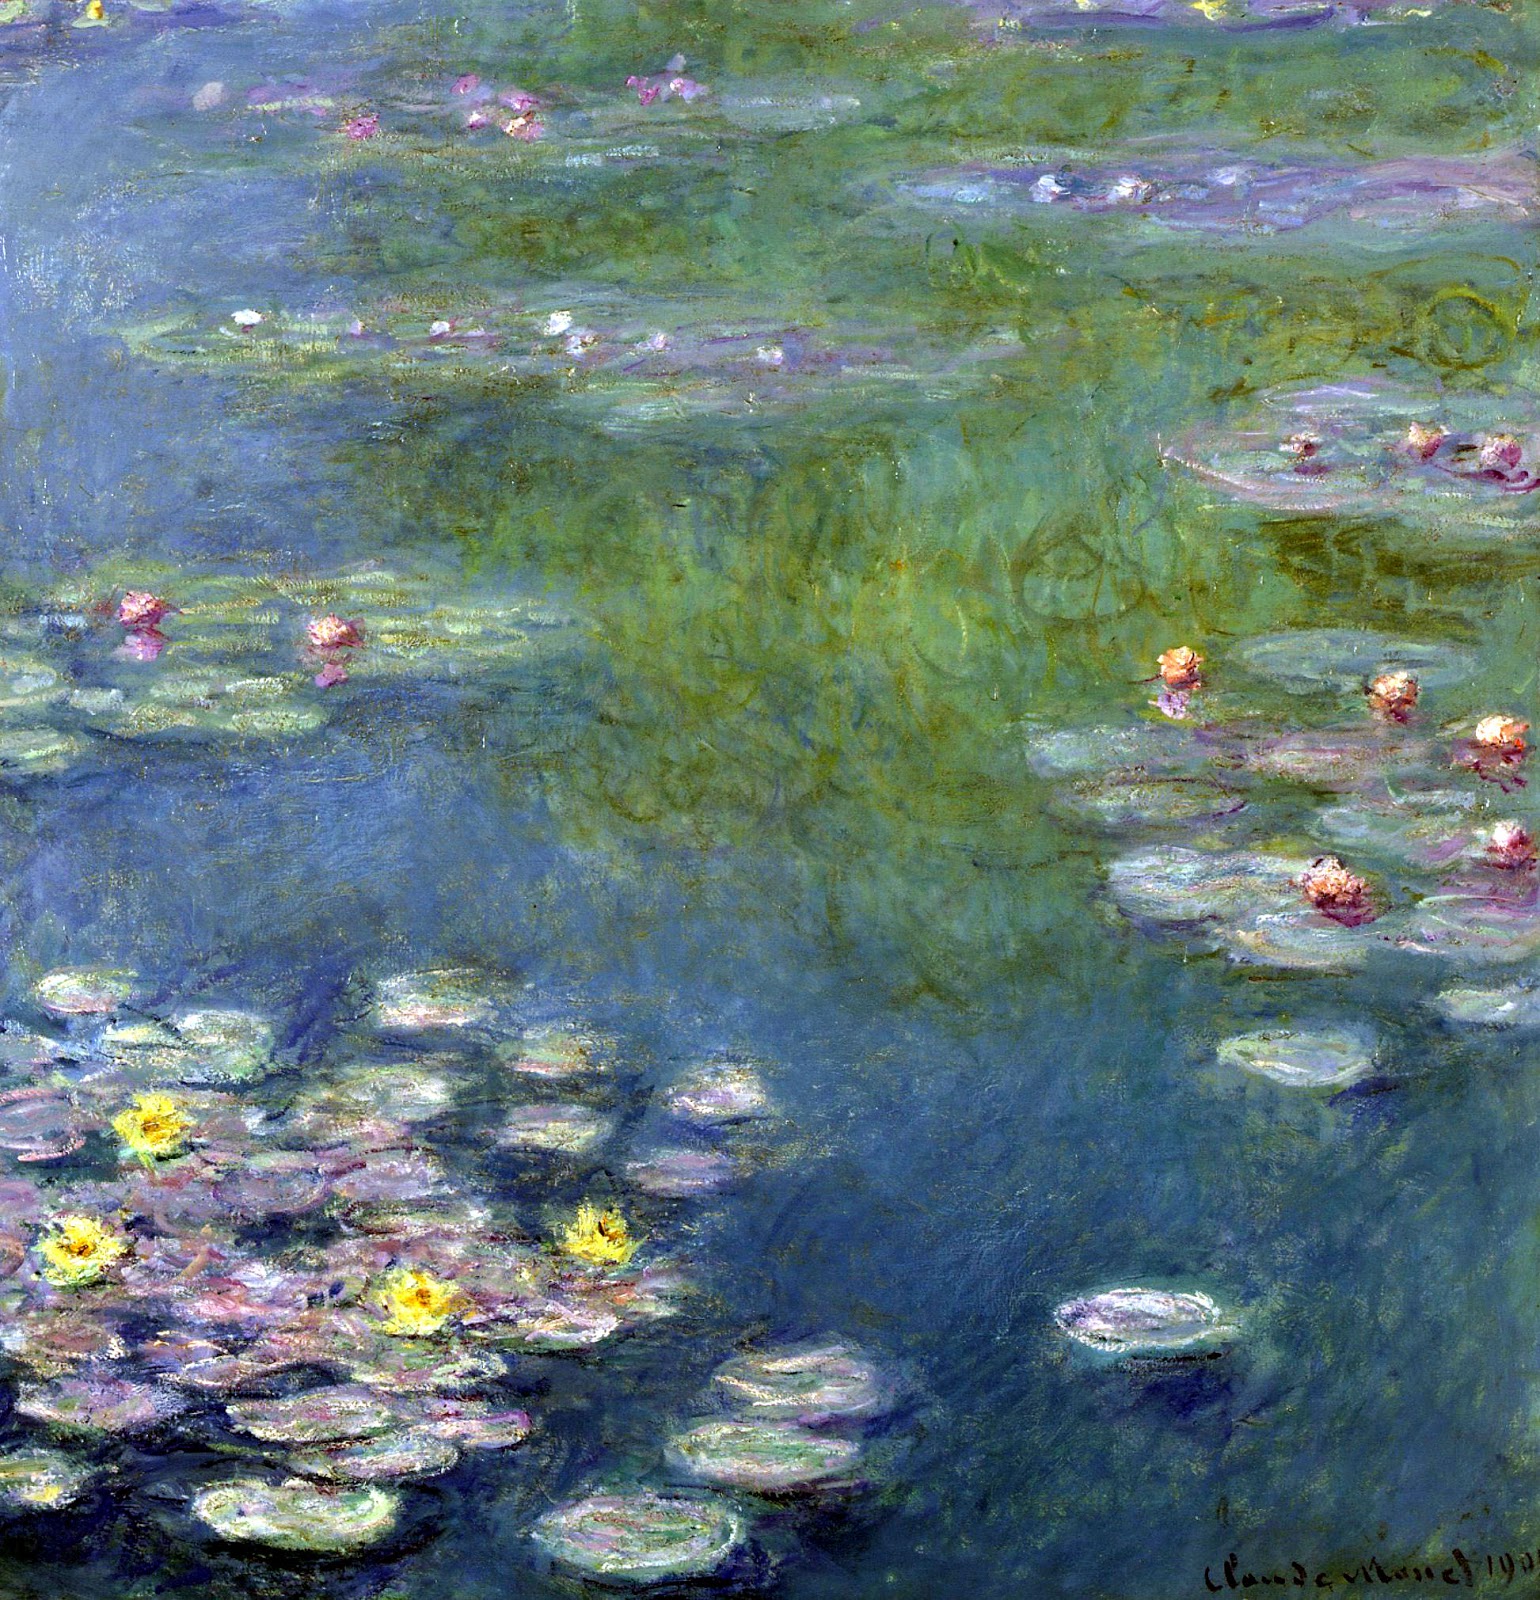 Claude+Monet-1840-1926 (893).jpg